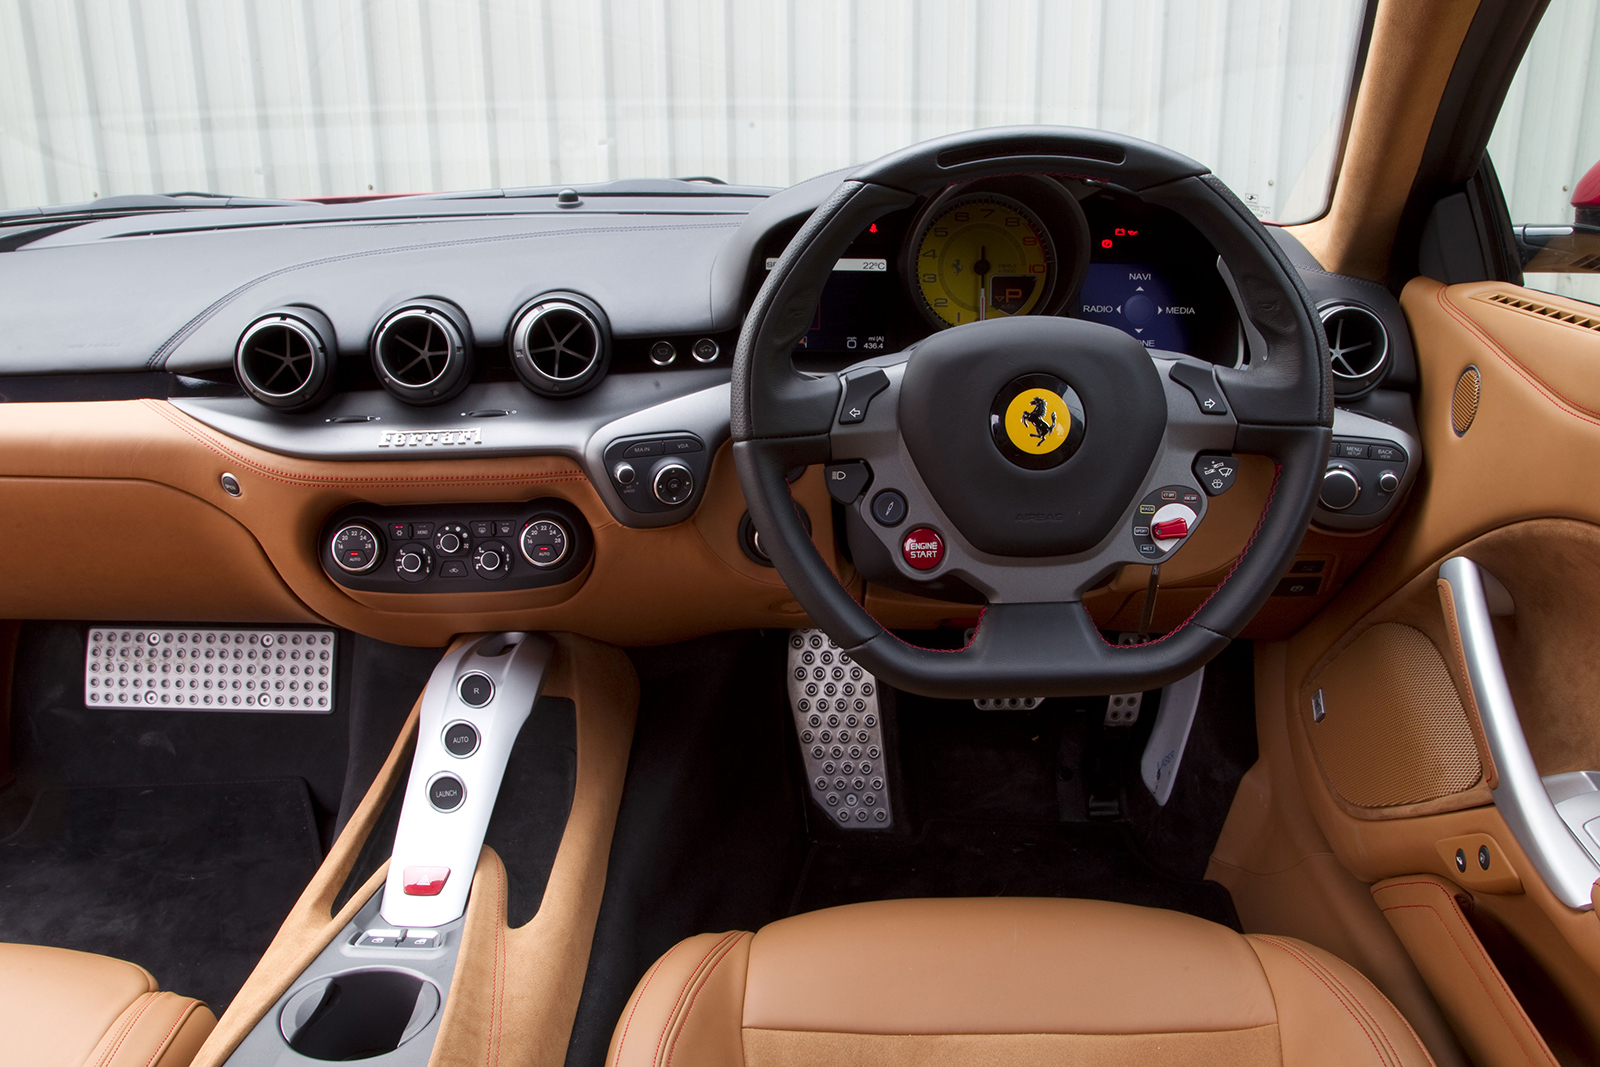 Ferrari F12 Berlinetta dashboard